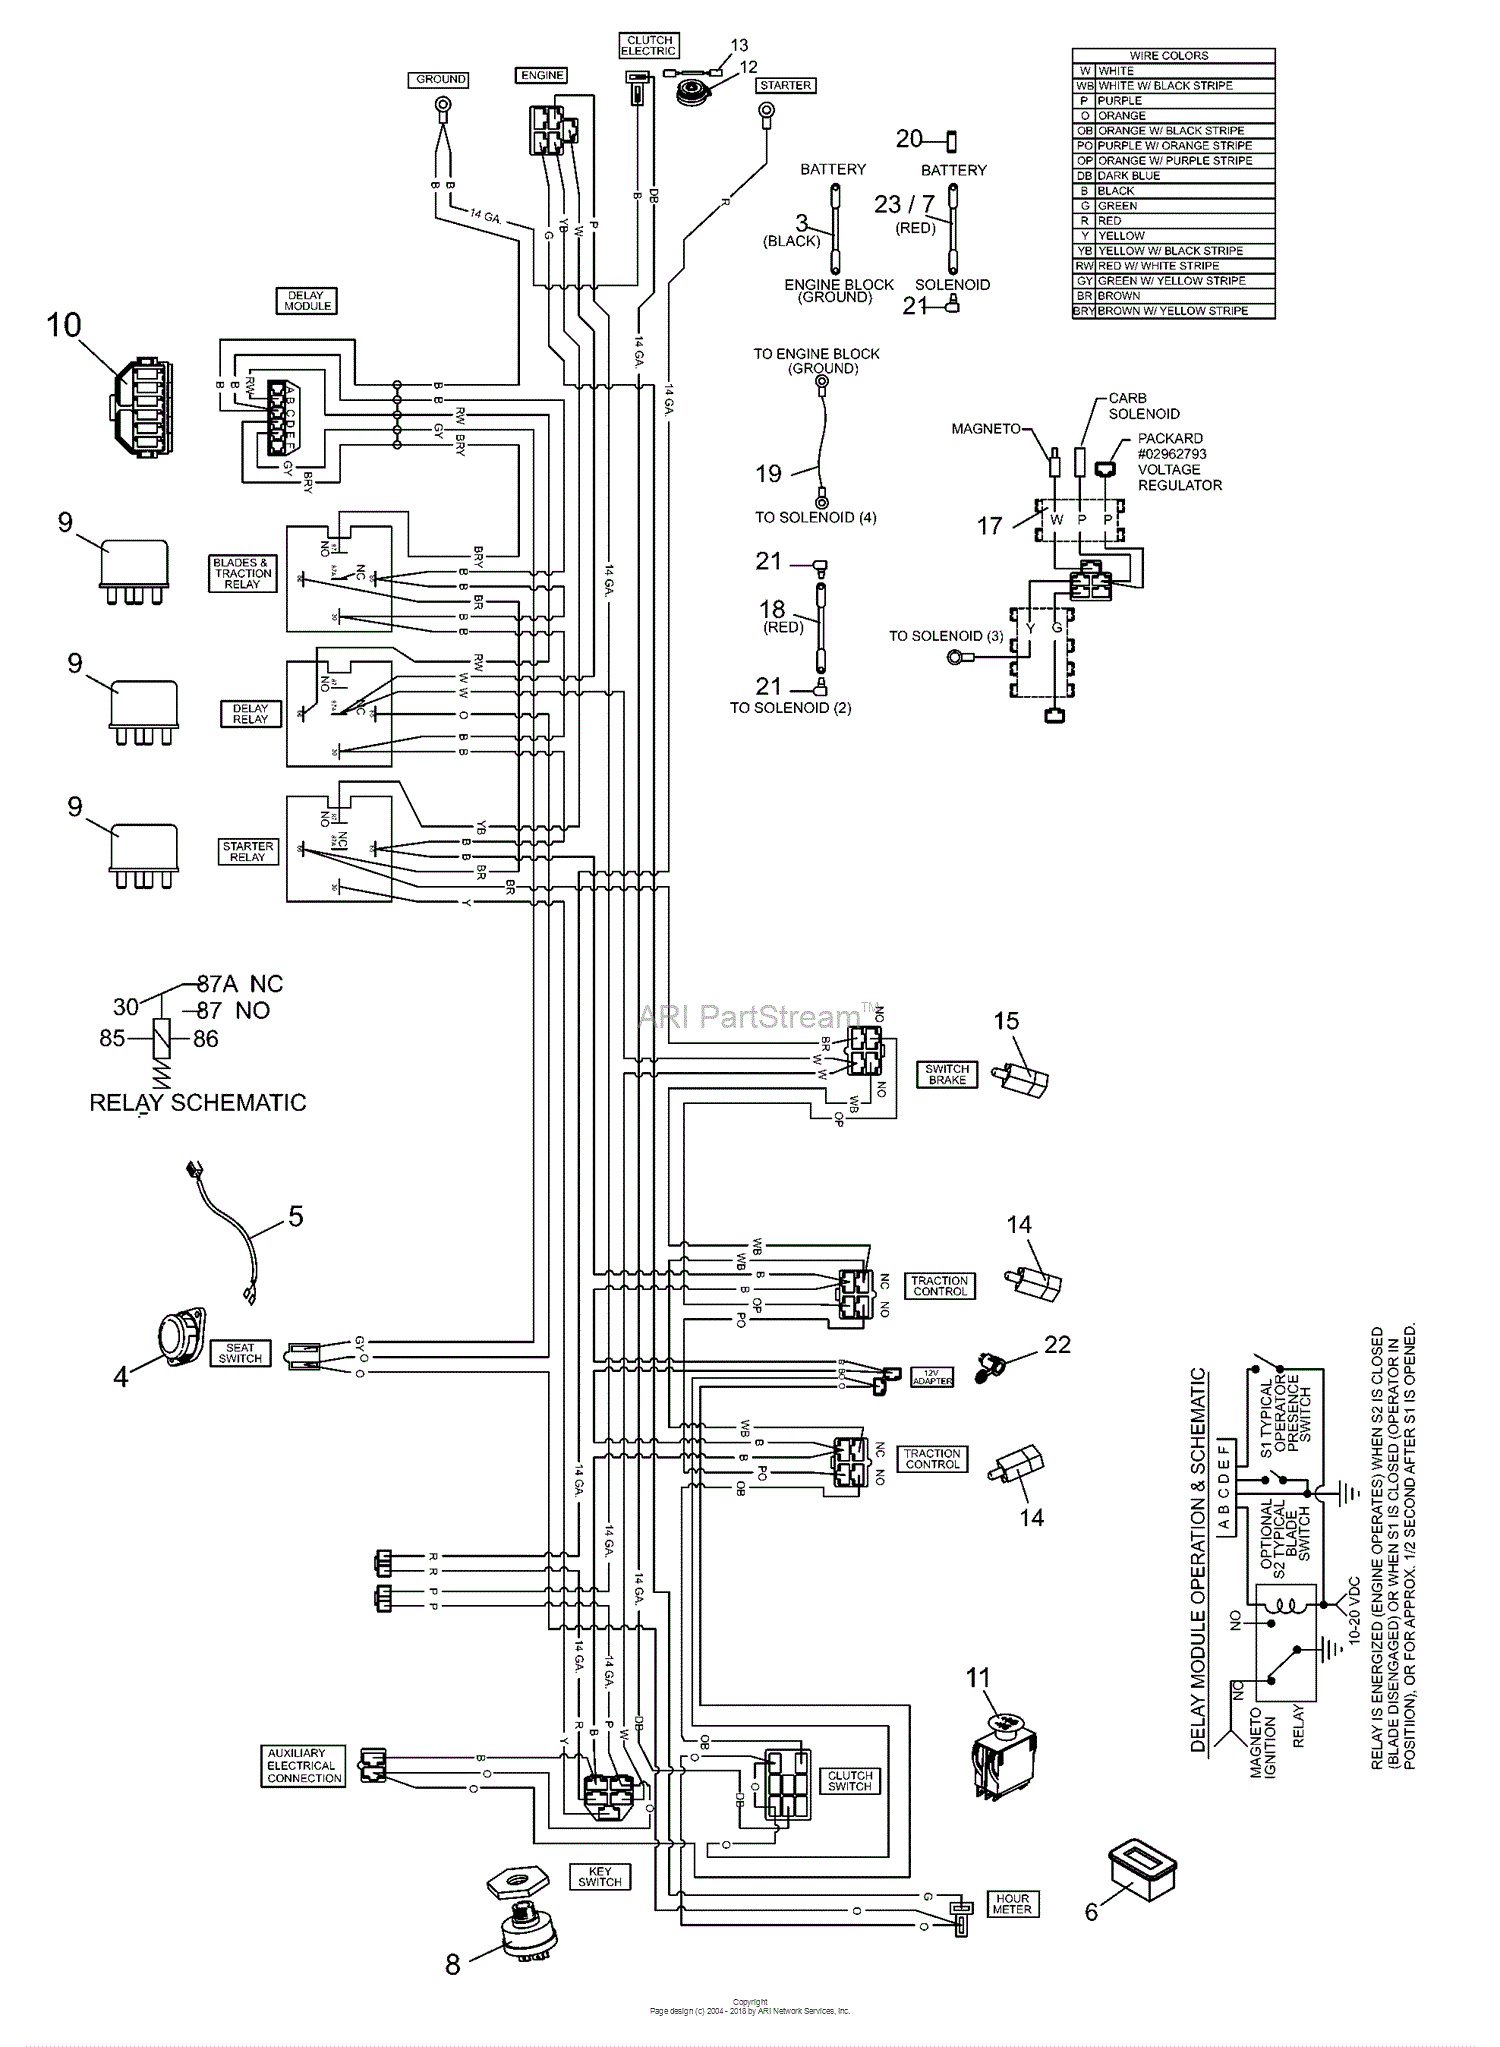 Typical Ignition Switch Wiring Diagram - Complete Wiring Schemas